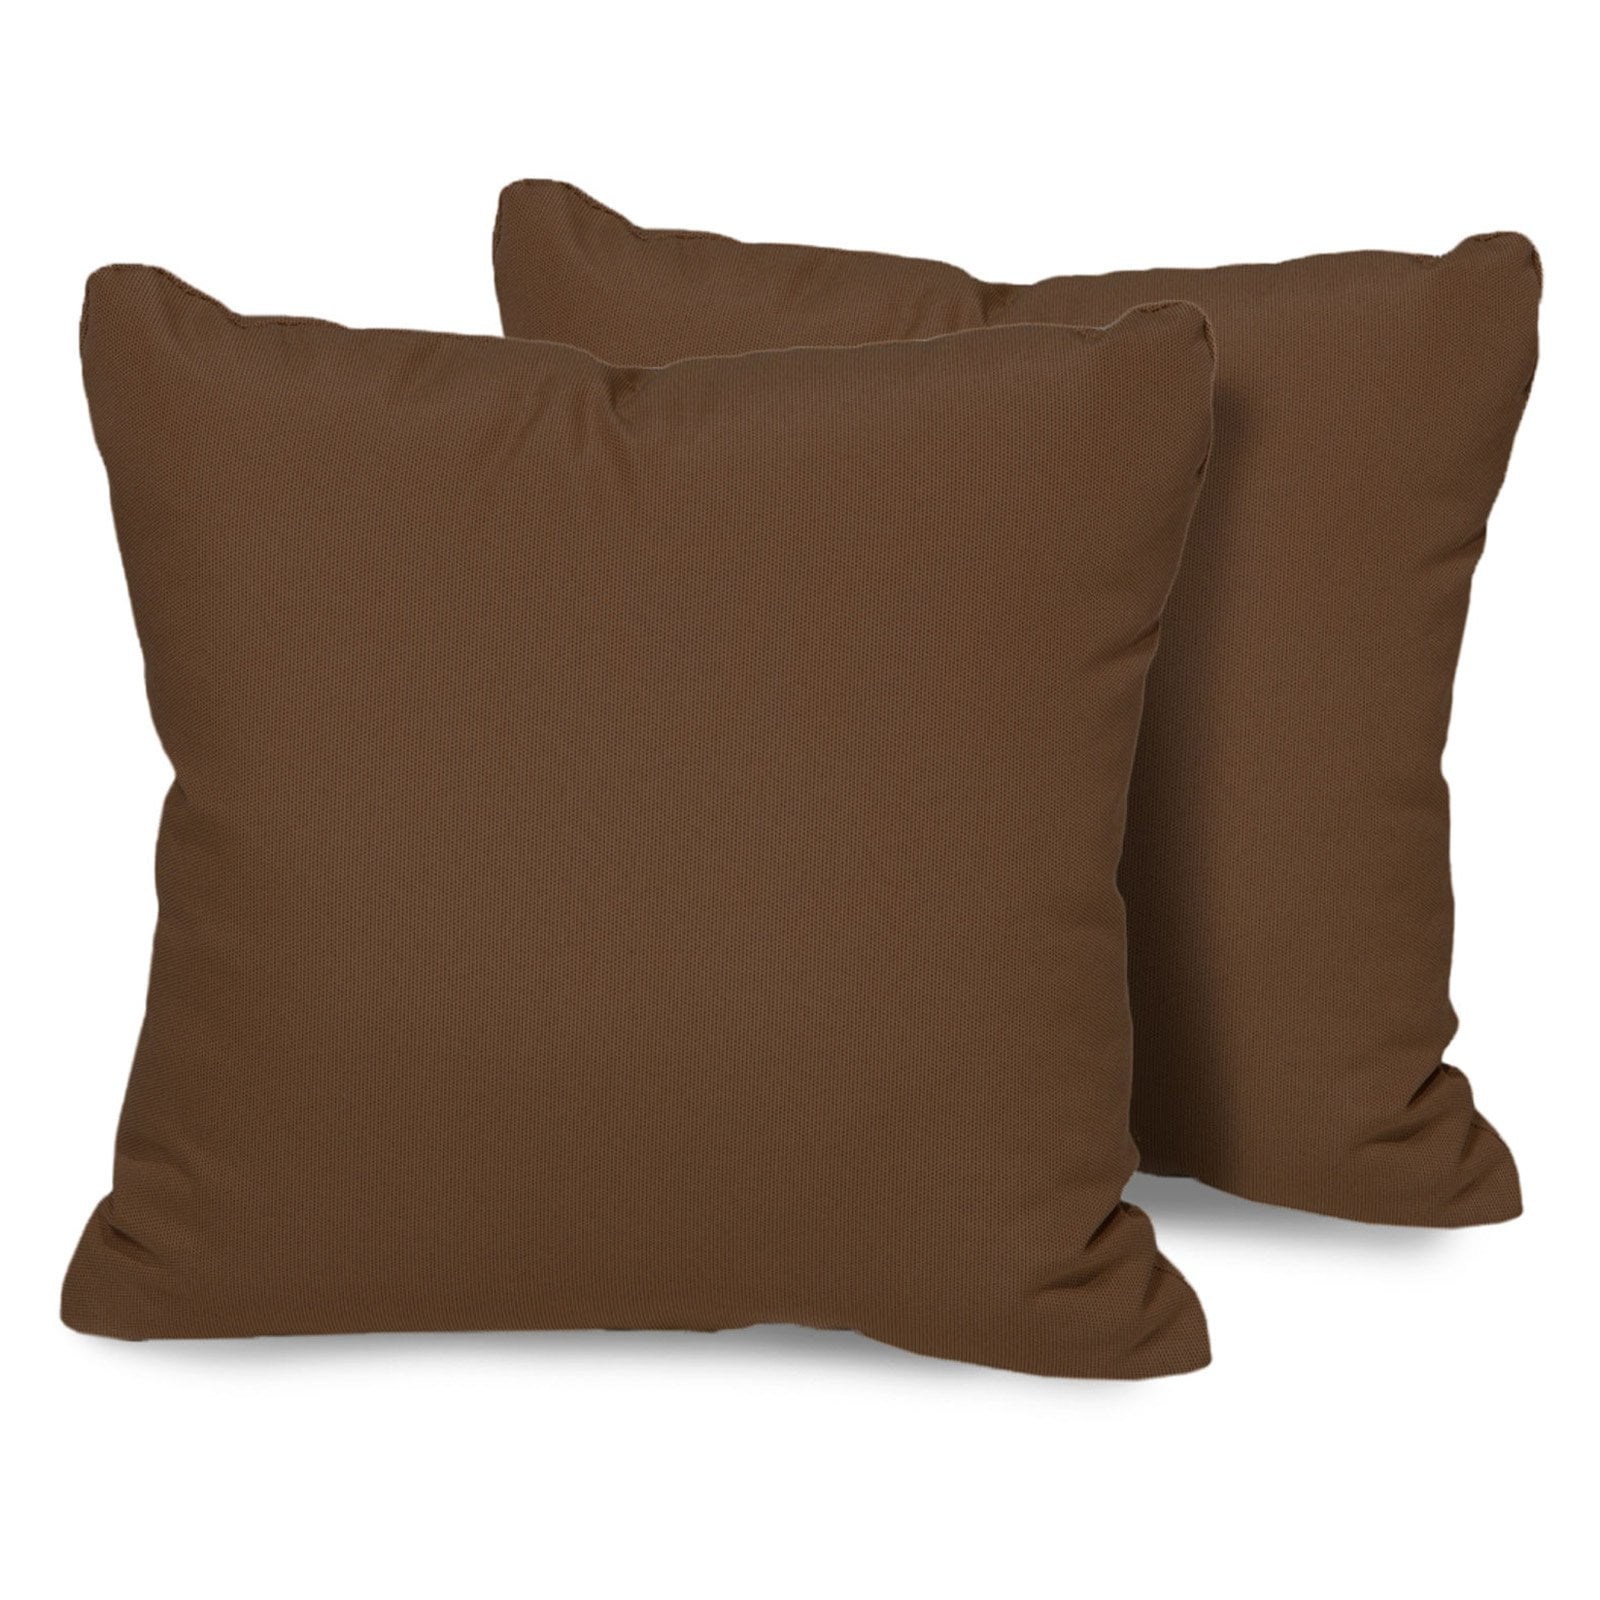 TK Classics Decorative Outdoor Throw Pillows - Set of 2 - Walmart.com ...